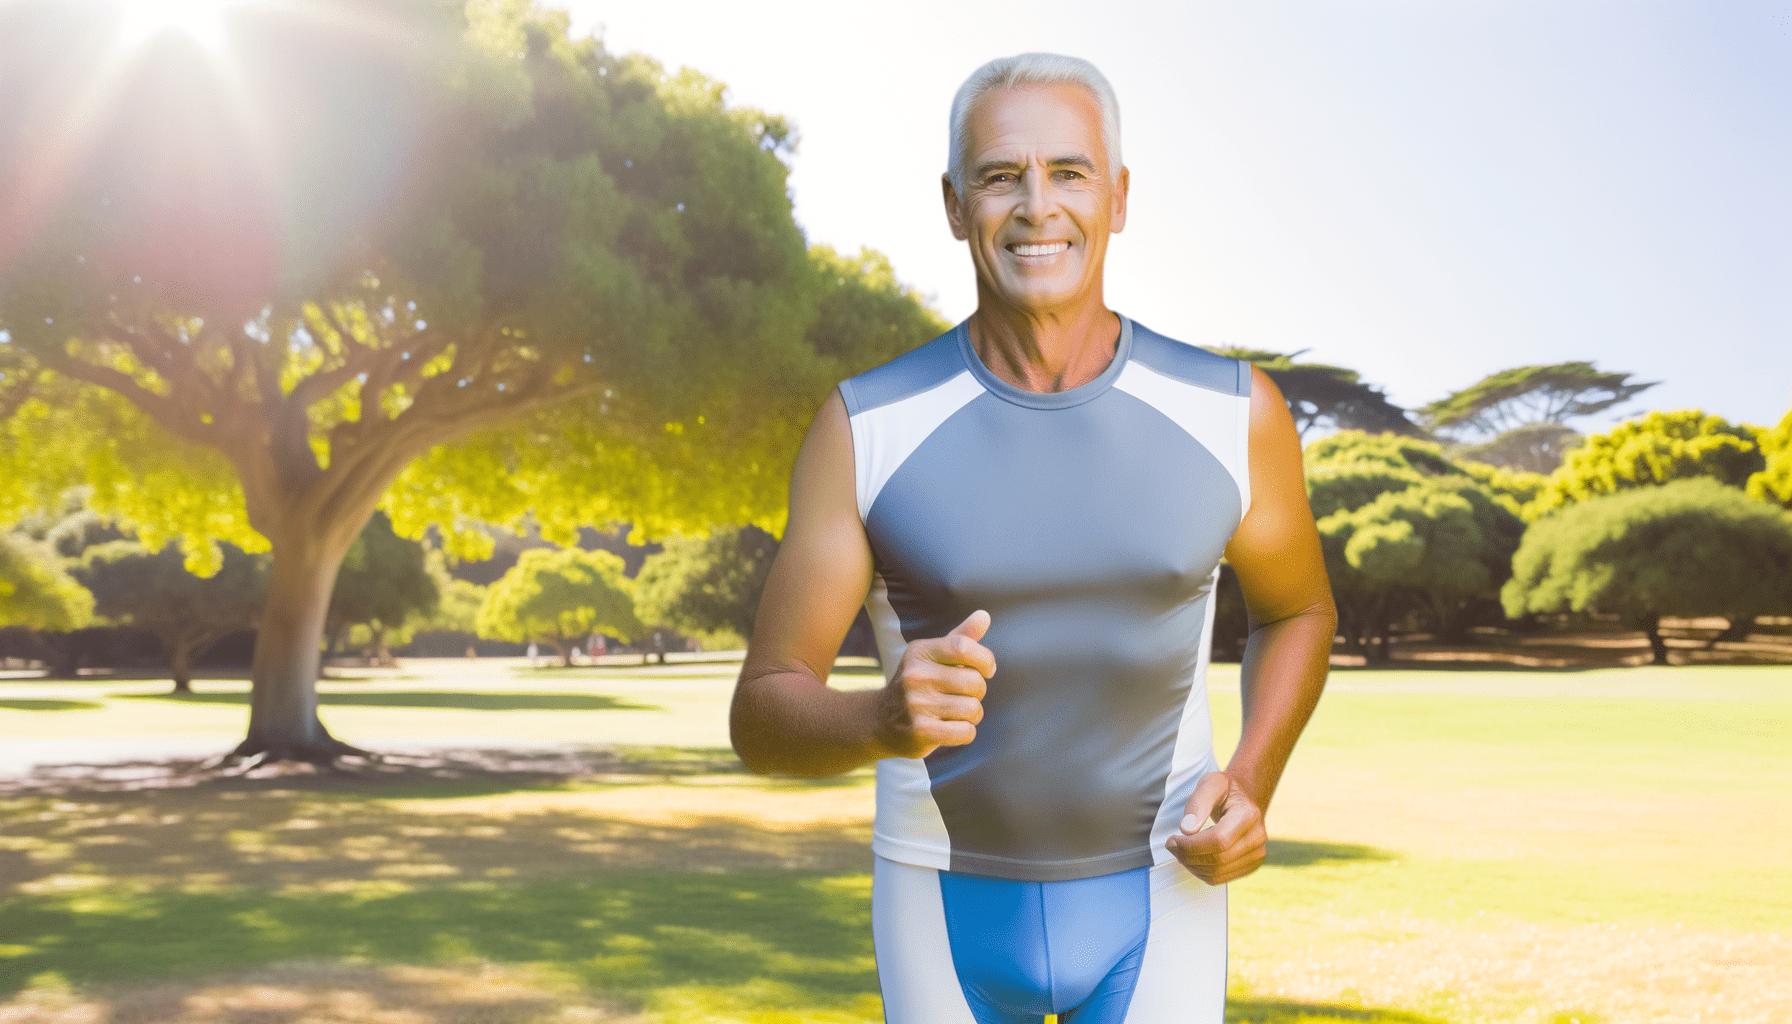 Heart Health Past 55: Building Endurance for a Longer Life